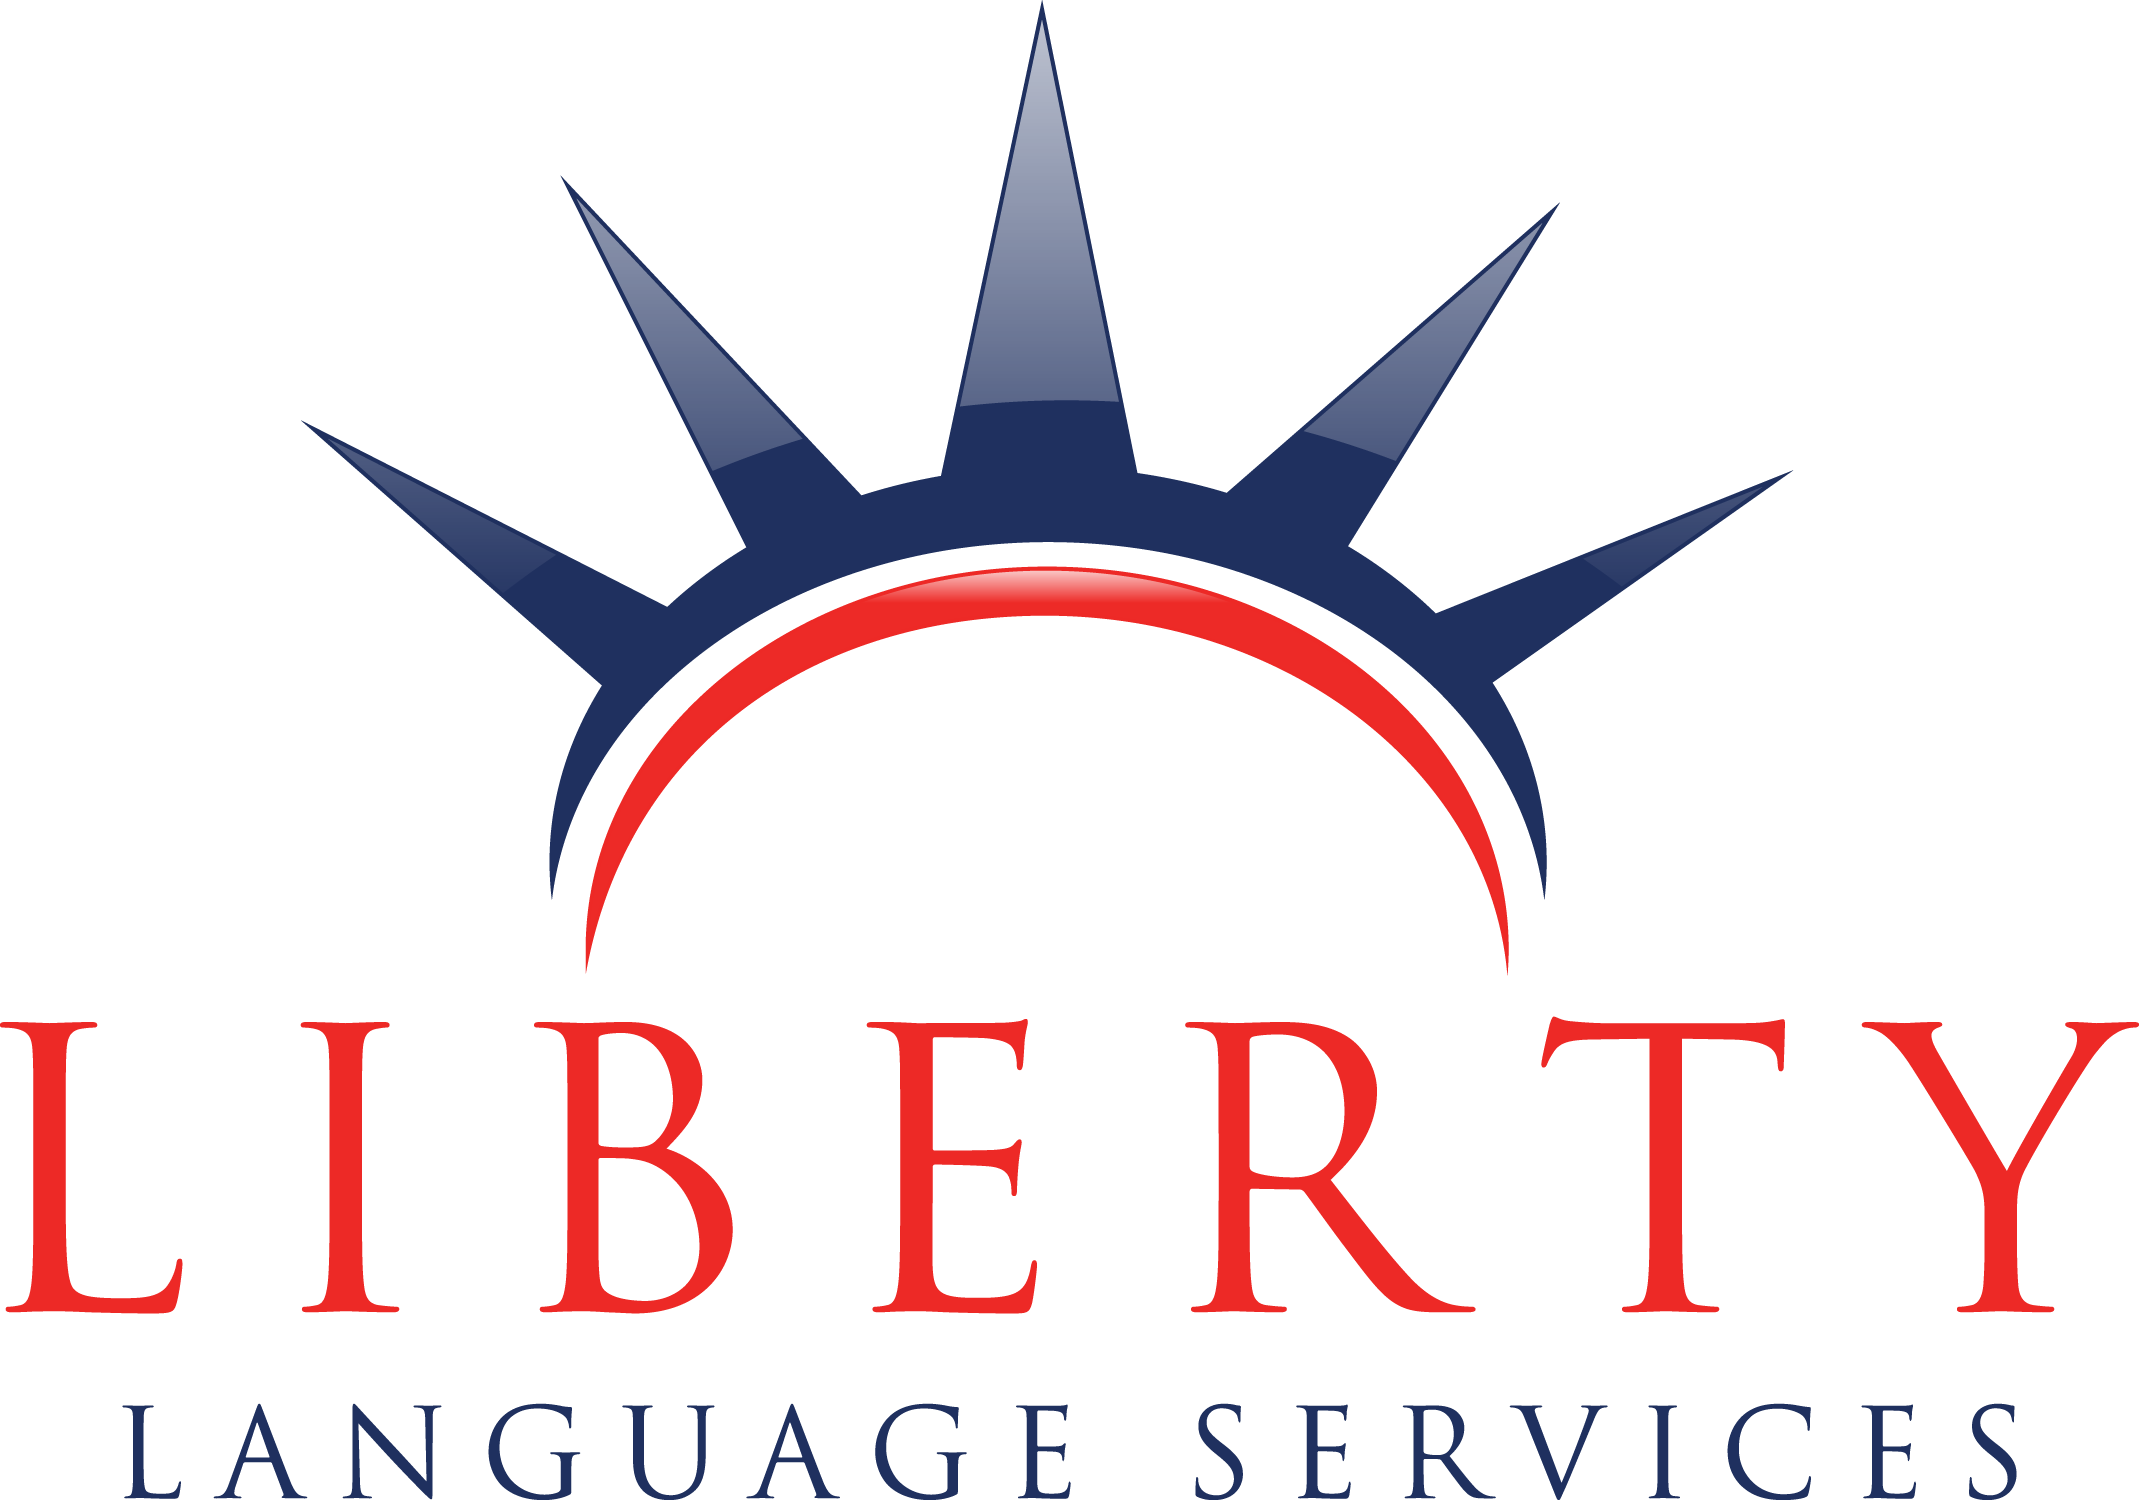 Liberty Language Services logo